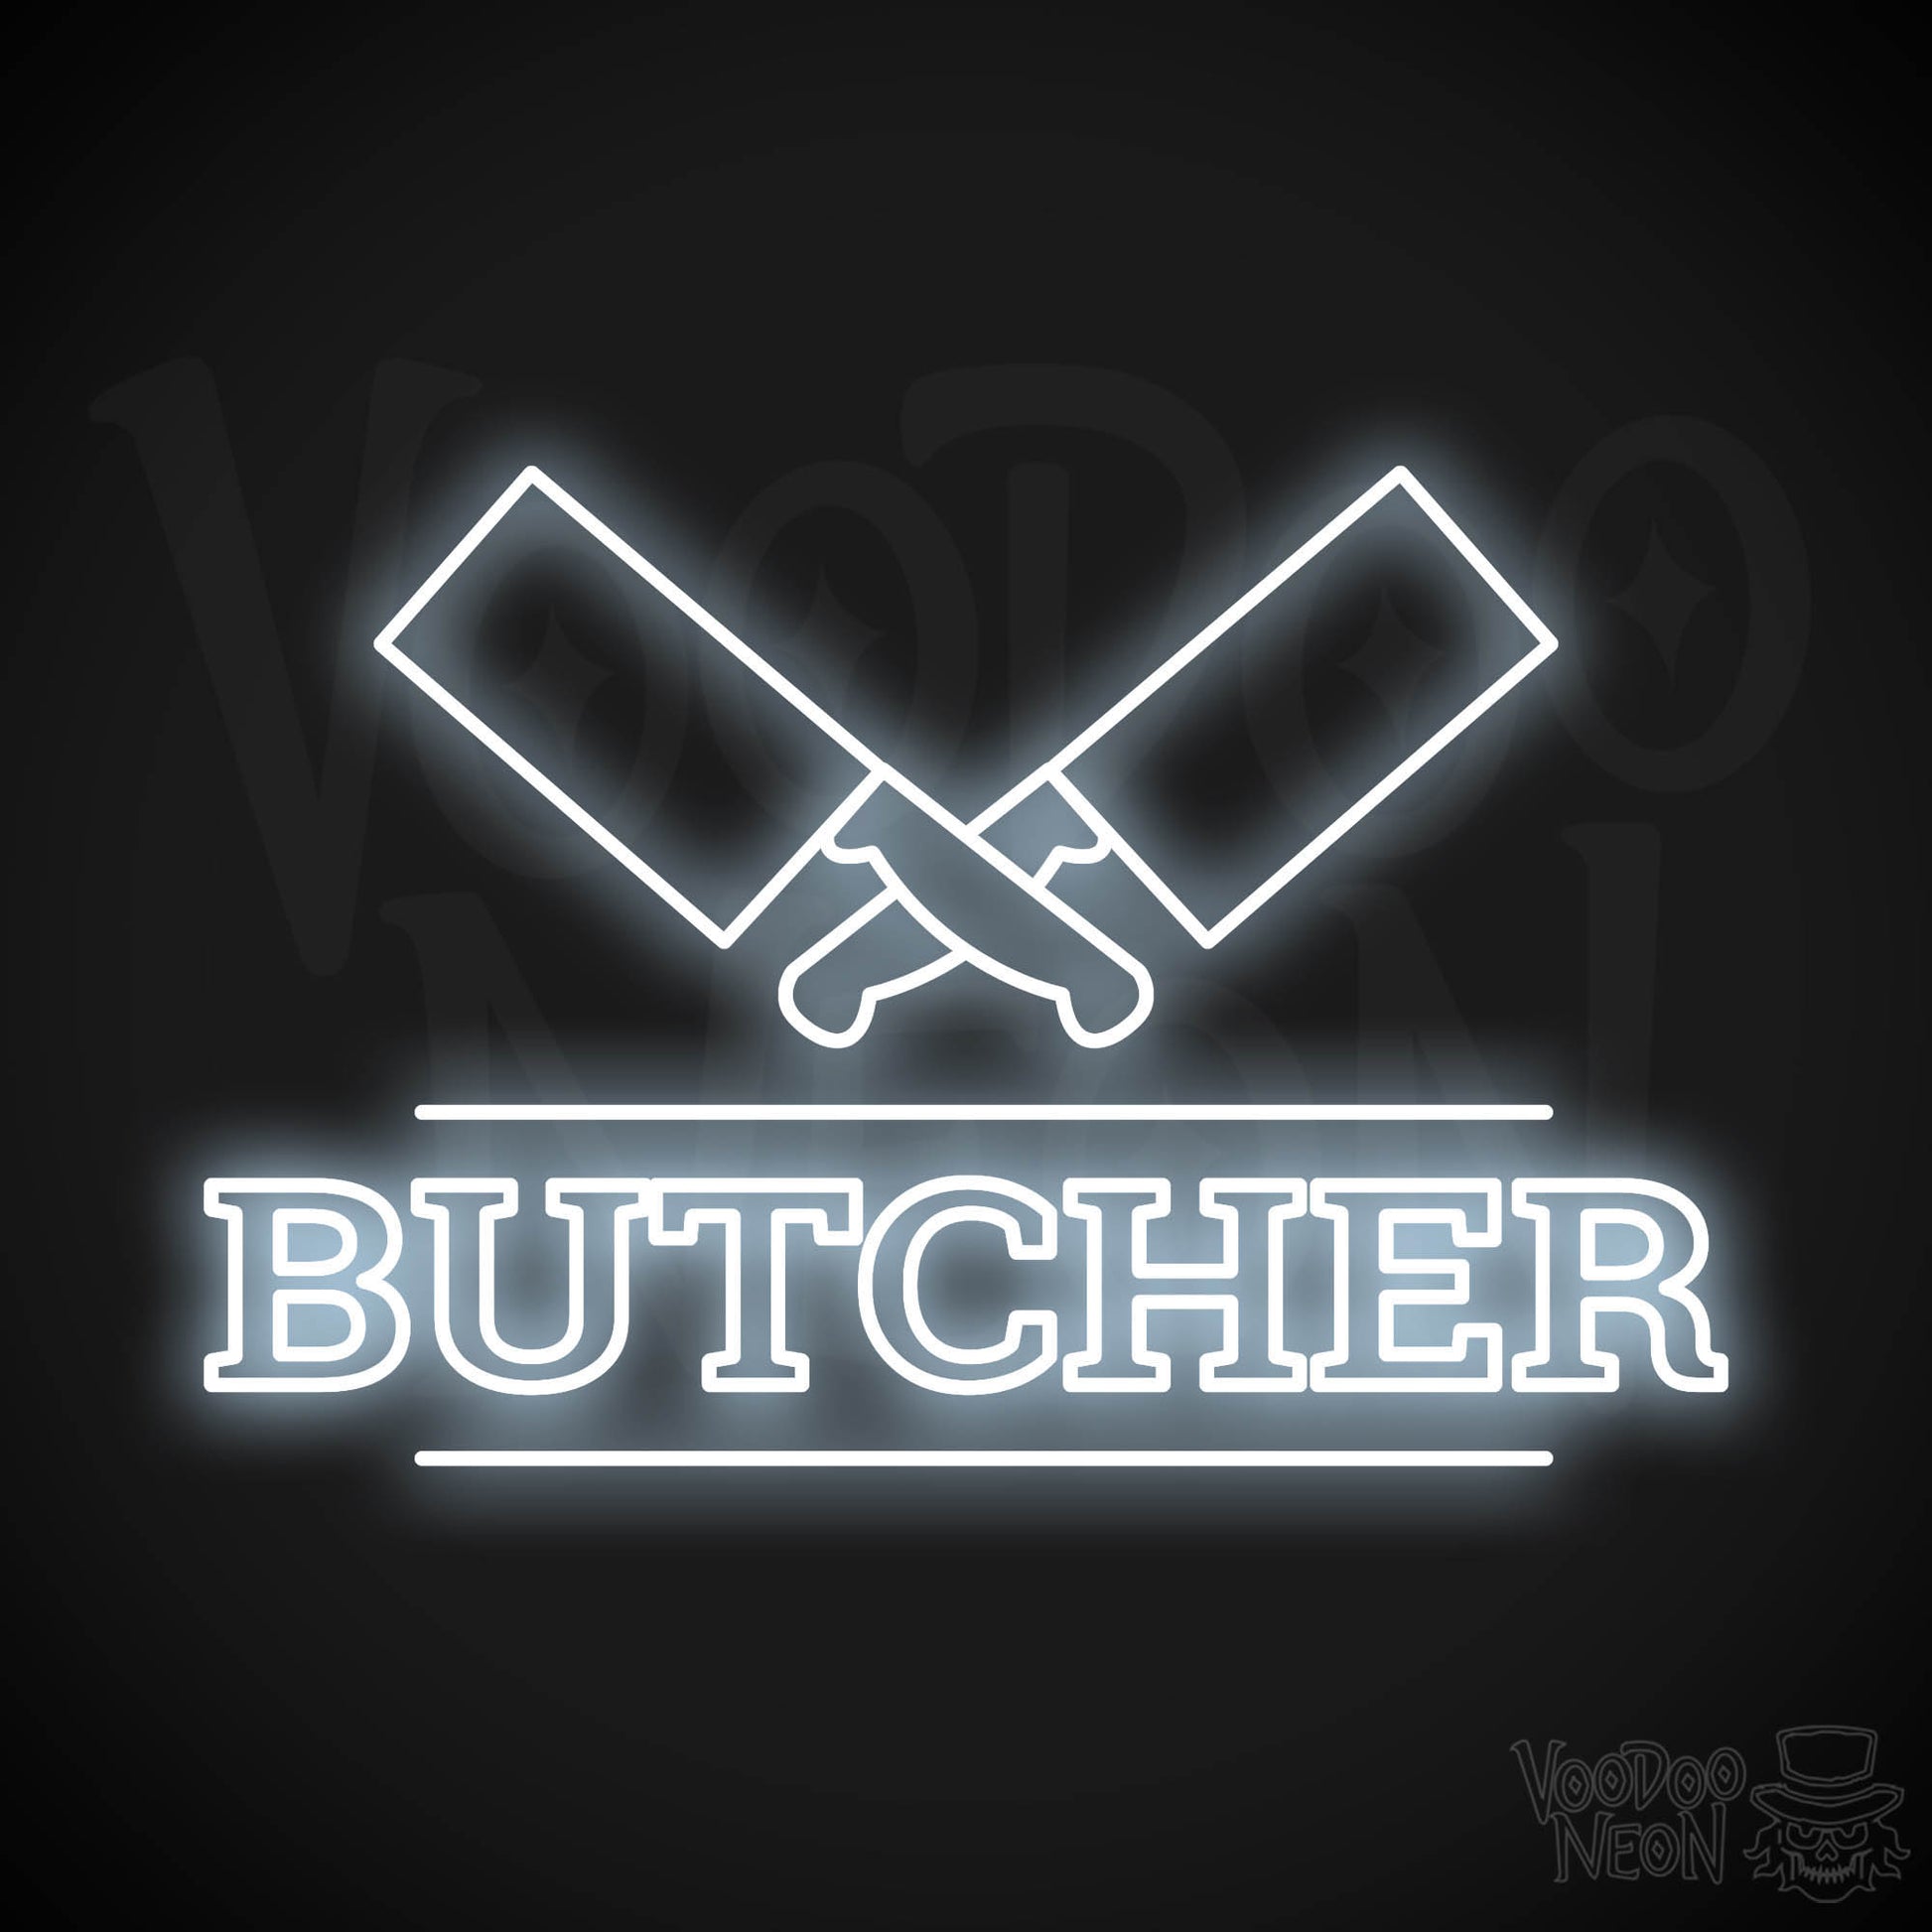 Butcher Shop LED Neon - Cool White